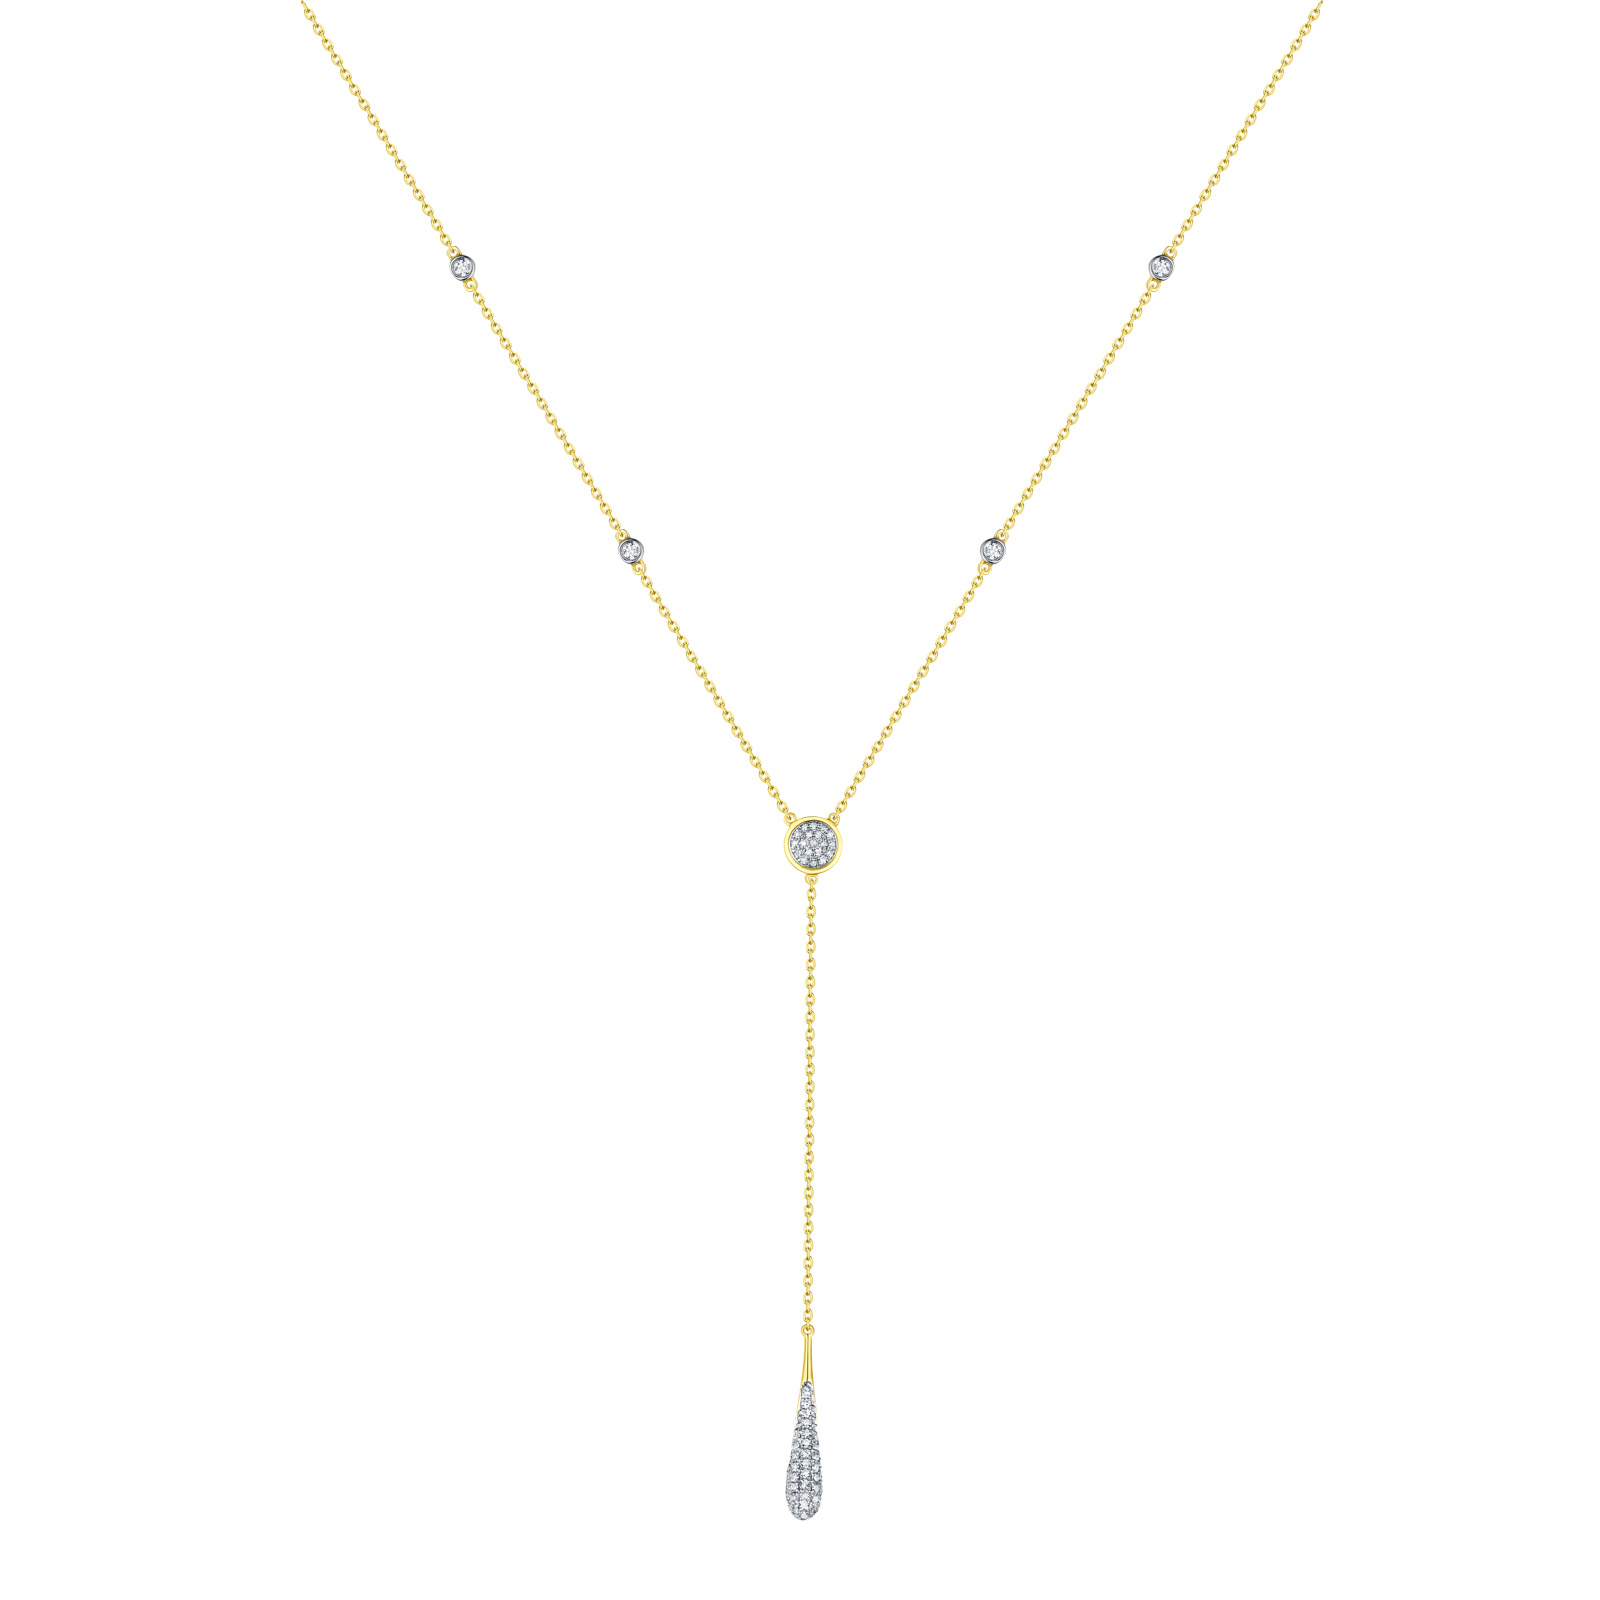 NL25999WHT – 14K Yellow Gold Diamond Necklace, 0.17 TCW